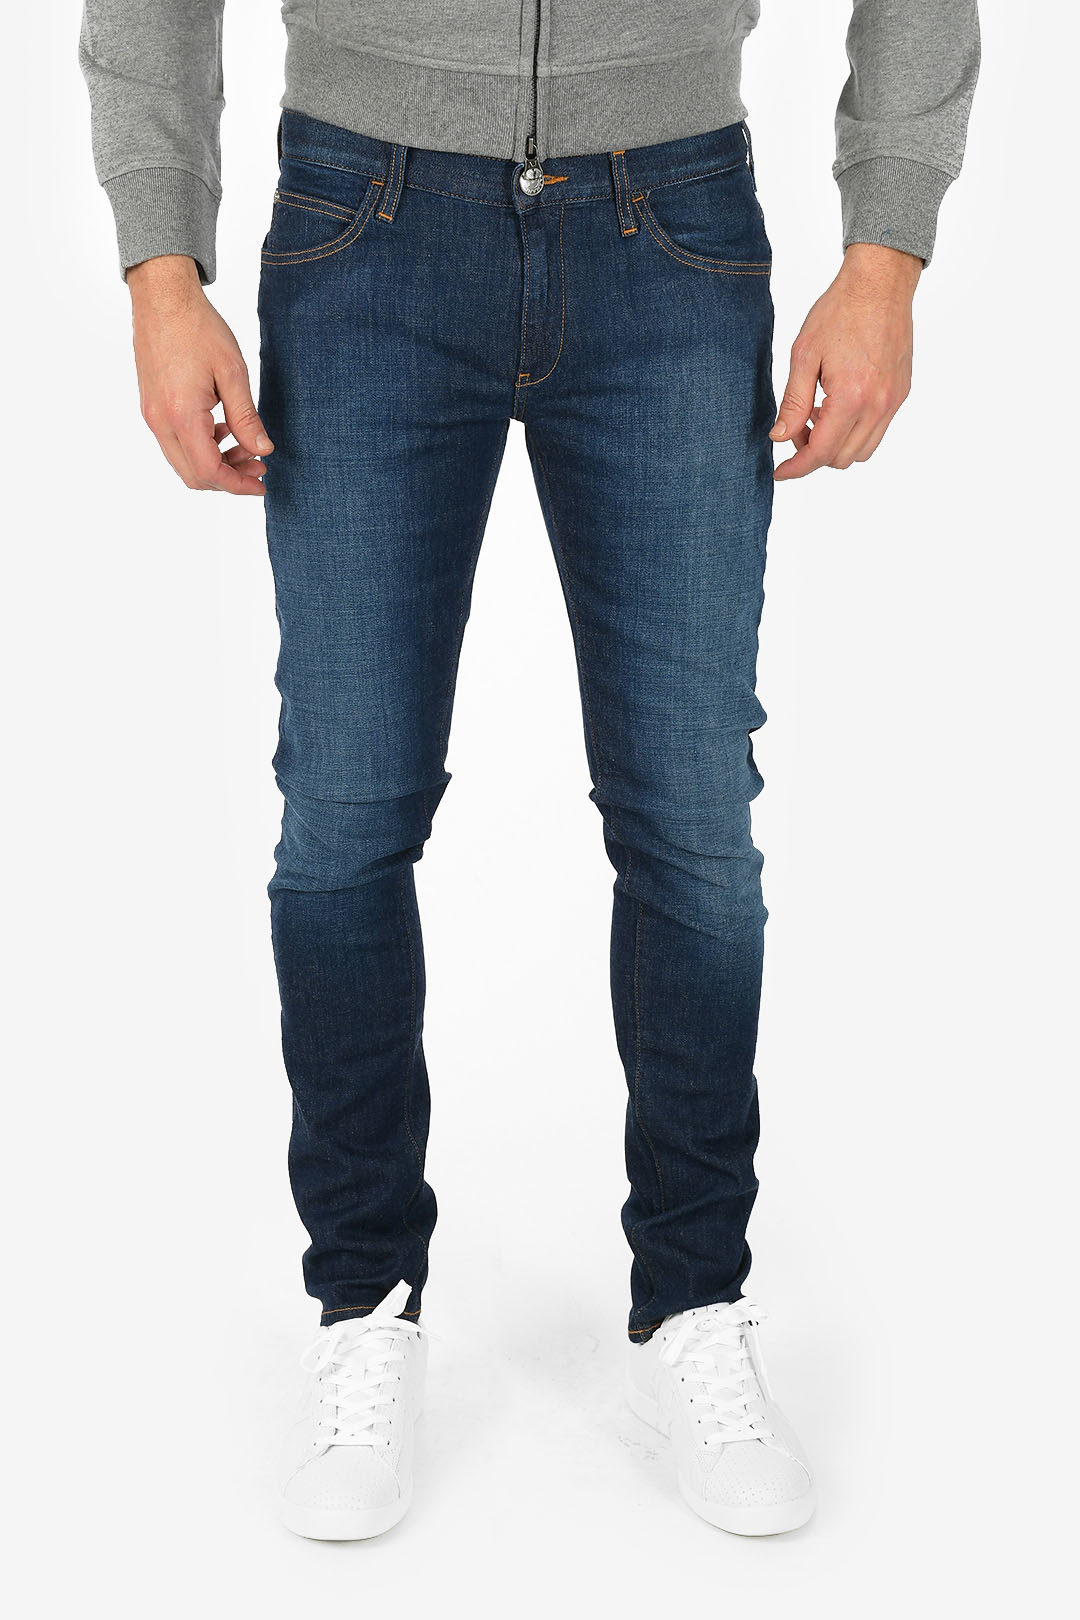 sund fornuft pelleten slump Armani ARMANI JEANS 18cm Extra Slim Fit J10 Jeans herren - Glamood Outlet